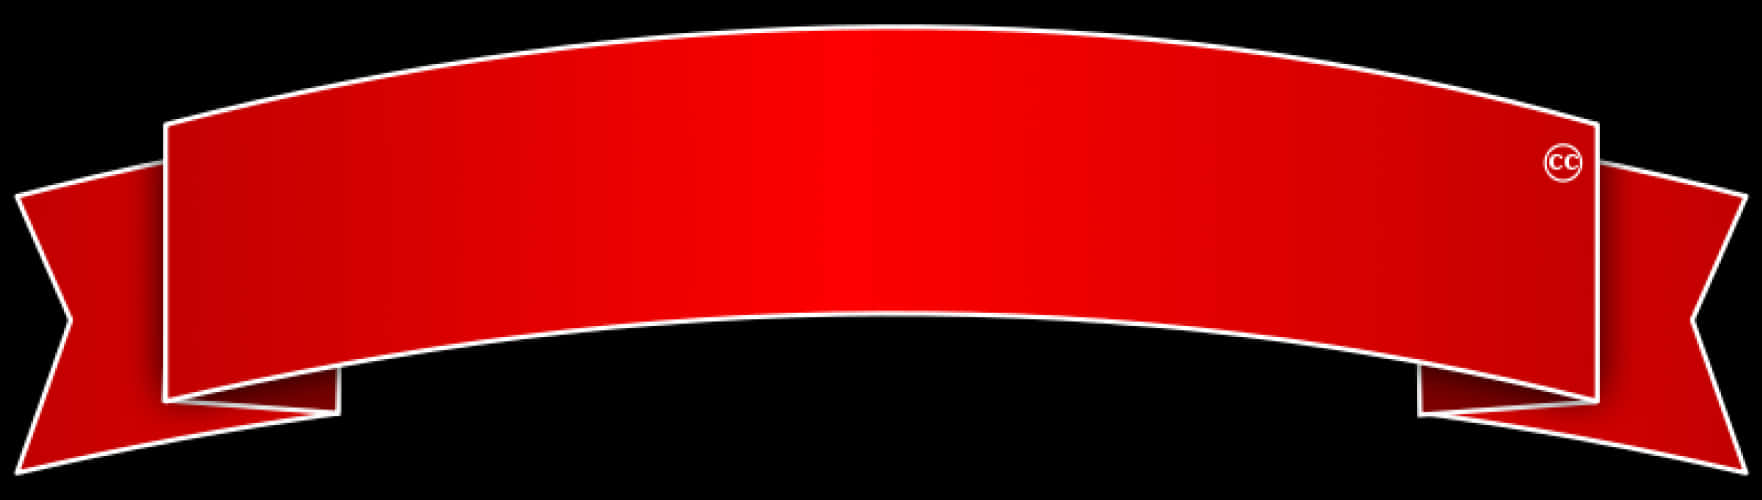 Red Banner Black Background PNG